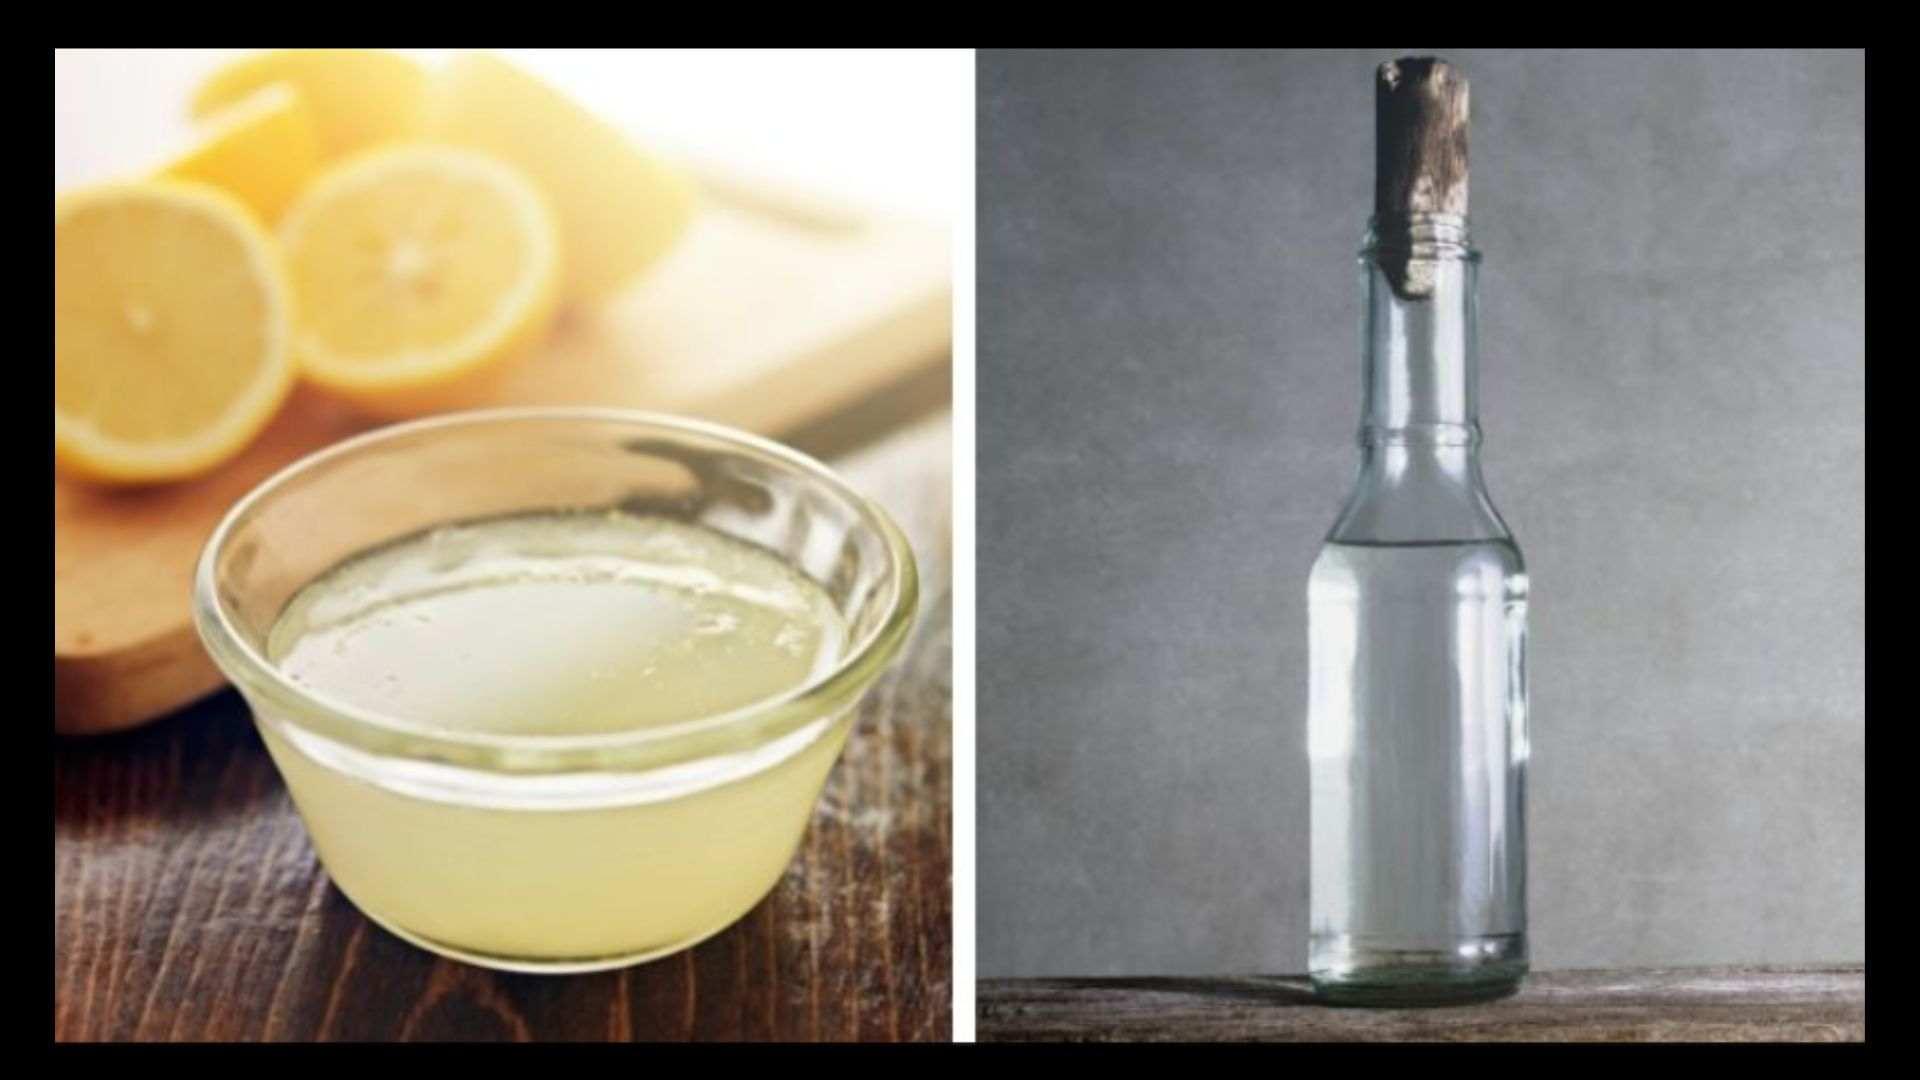 Spray Lemon Juice and White Vinegar Mixture: